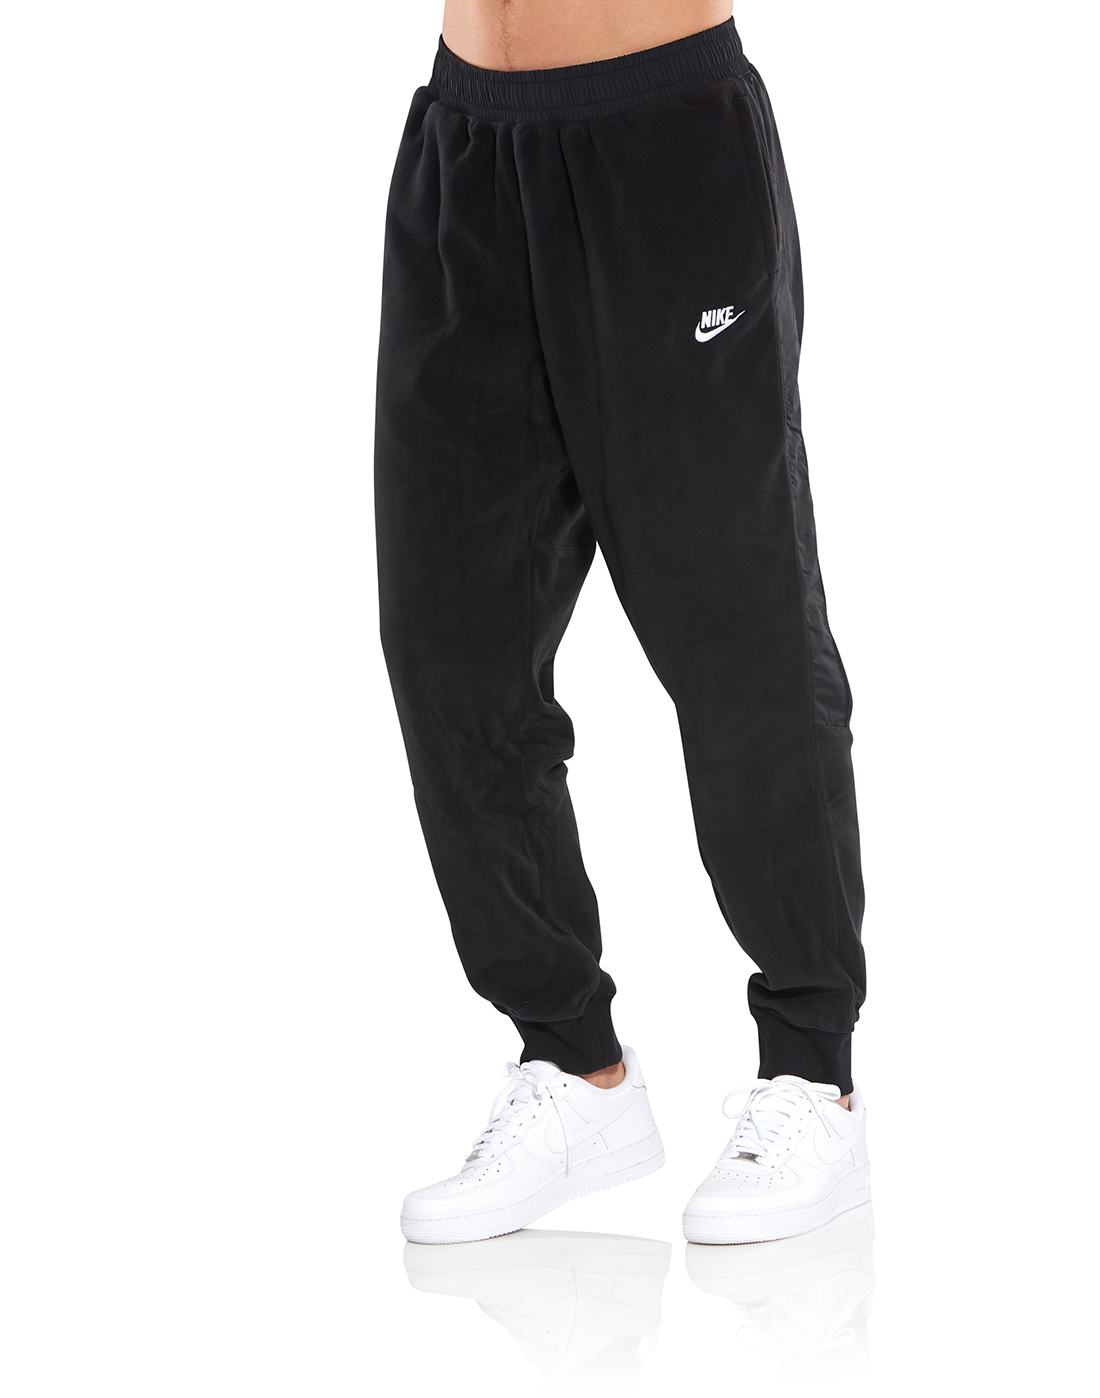 Nike Mens Winter Fleece Pants - Black | Life Style Sports UK